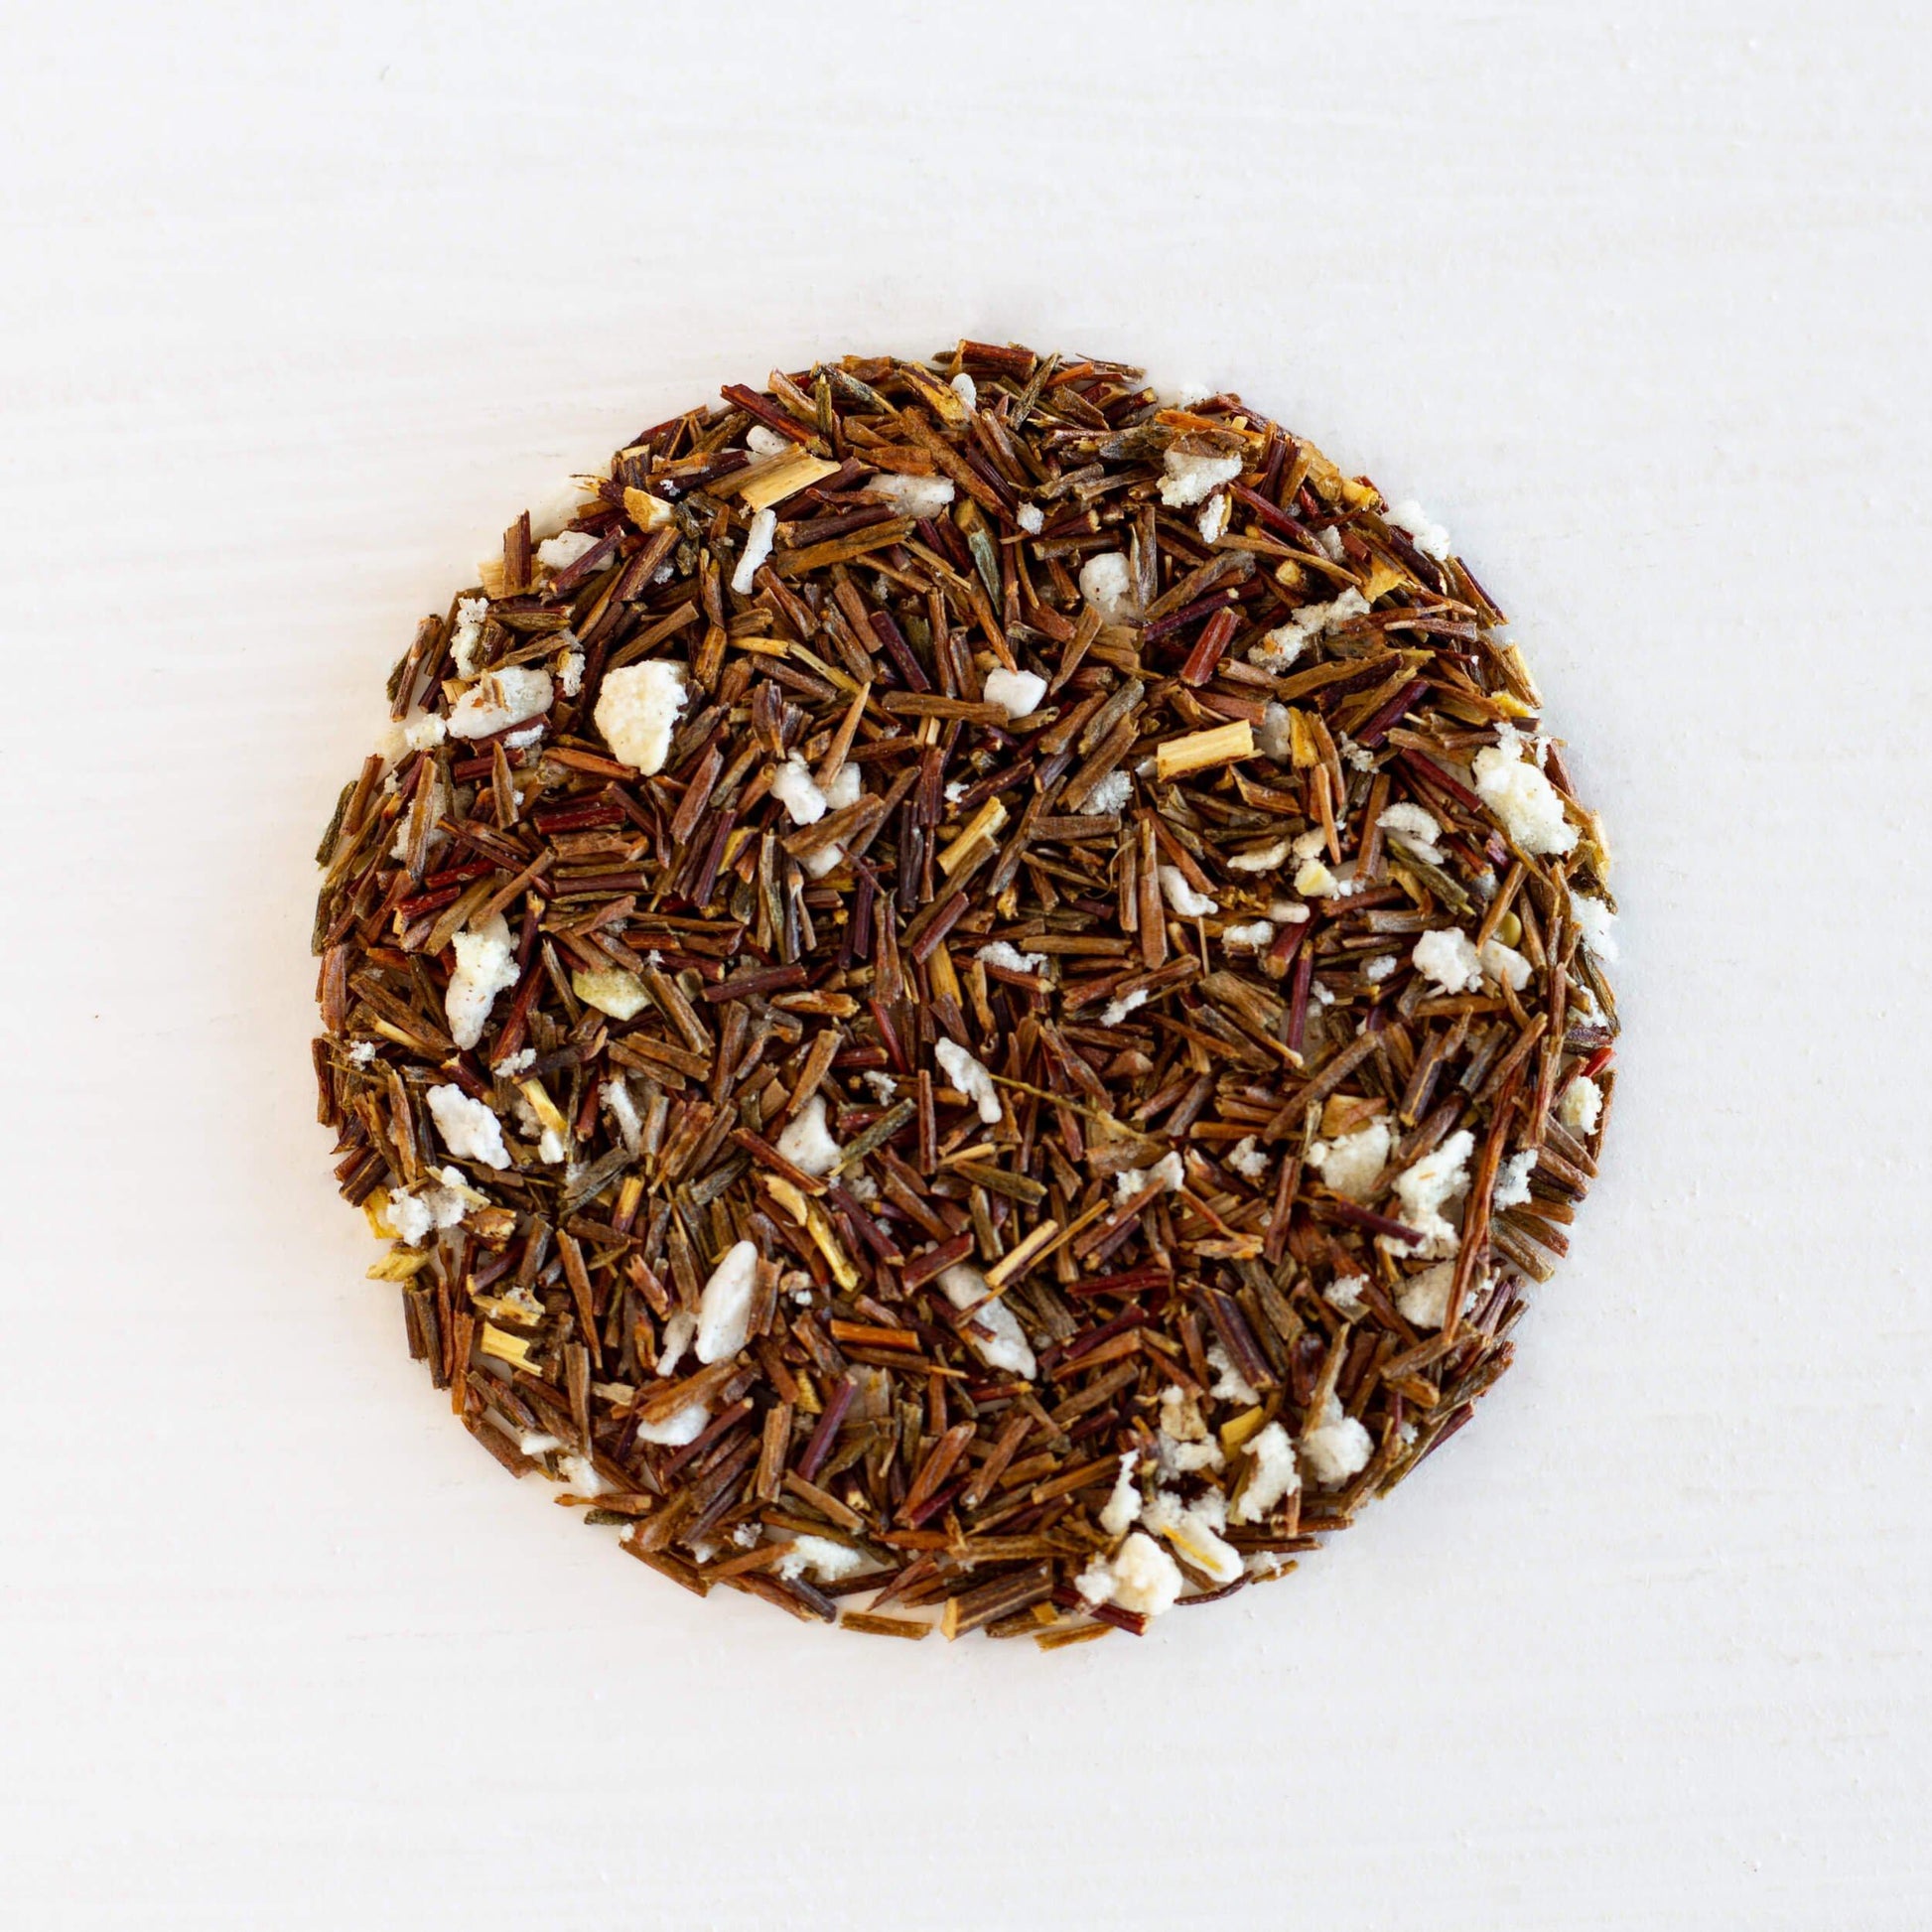 Carmen Miranda Rooibos Organic Herbal Tea shown from above as loose leaf tea in a tight circle